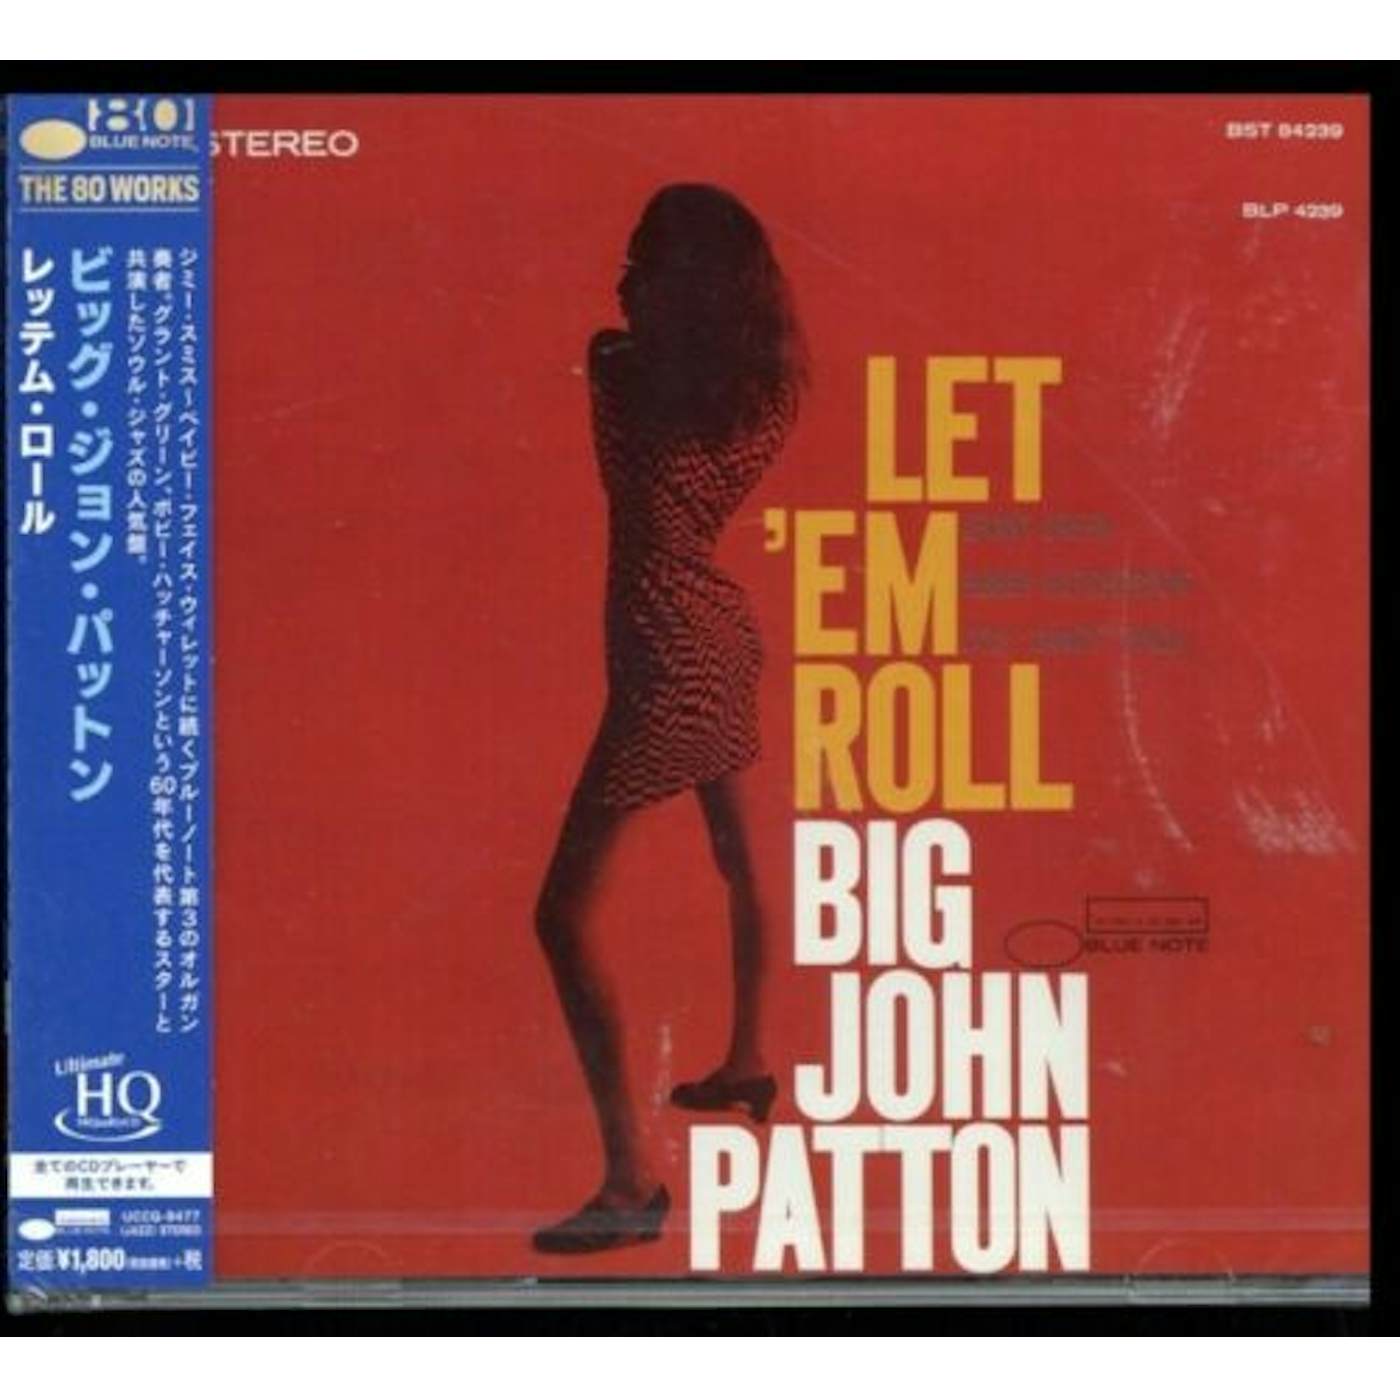 Big John Patton LET'EM ROLL CD